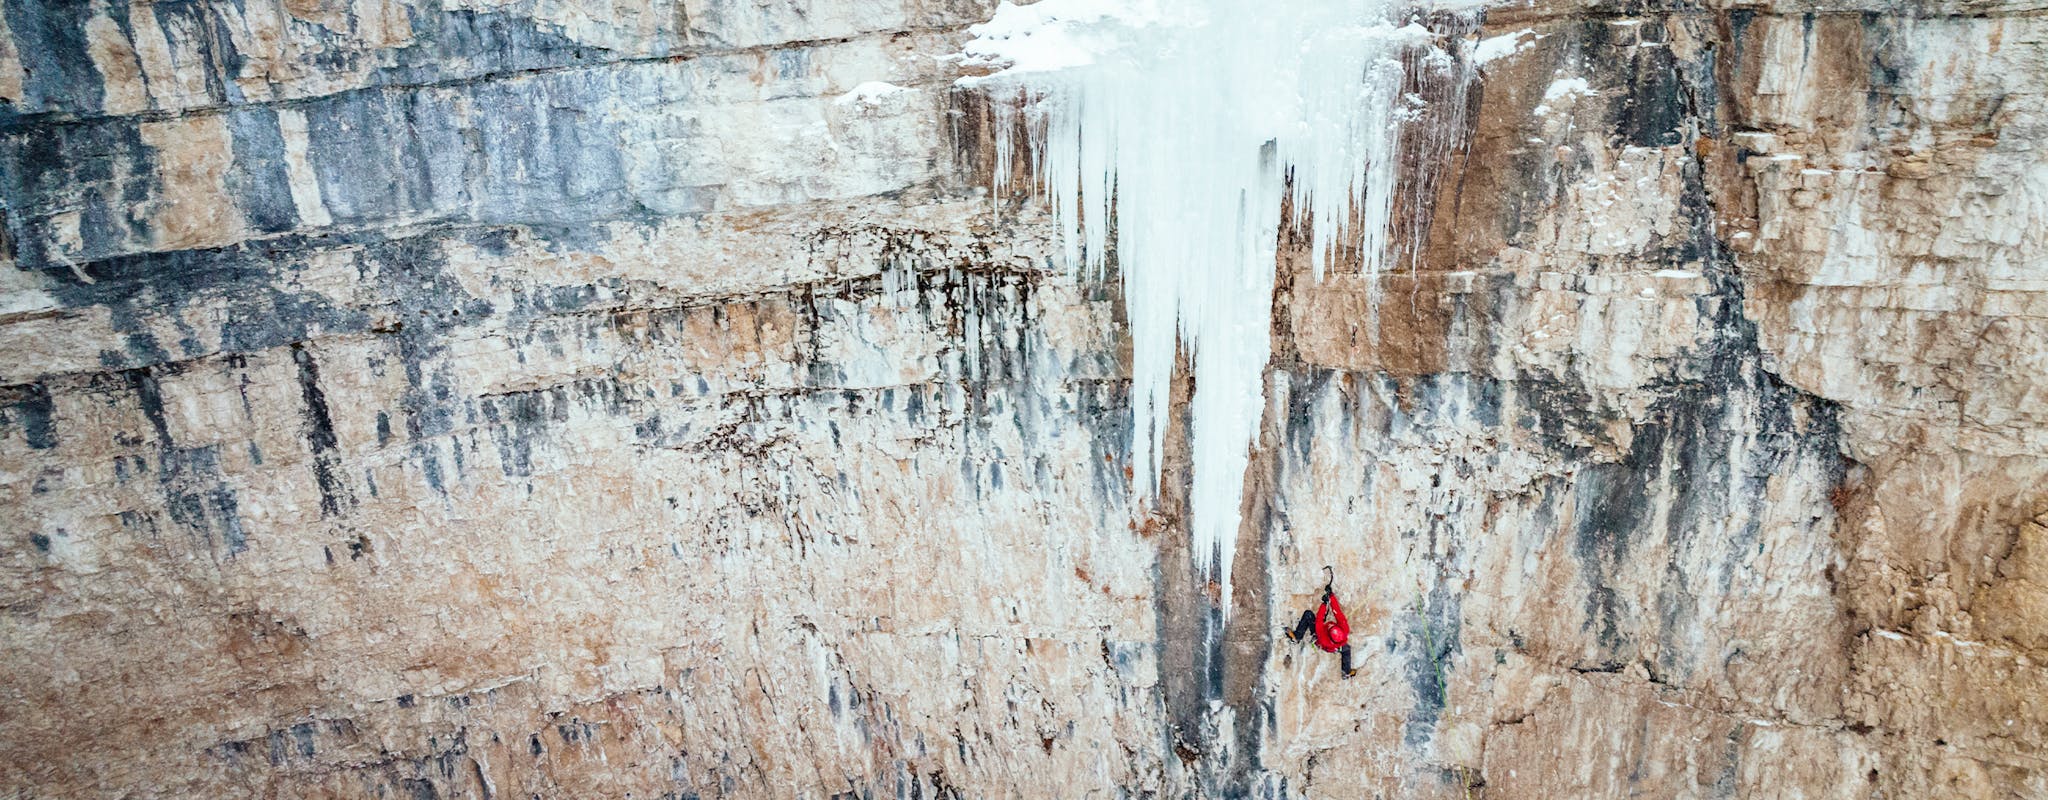 Black Diamond Athlete Aaron Mulkey climbing ice in Wyoming. 